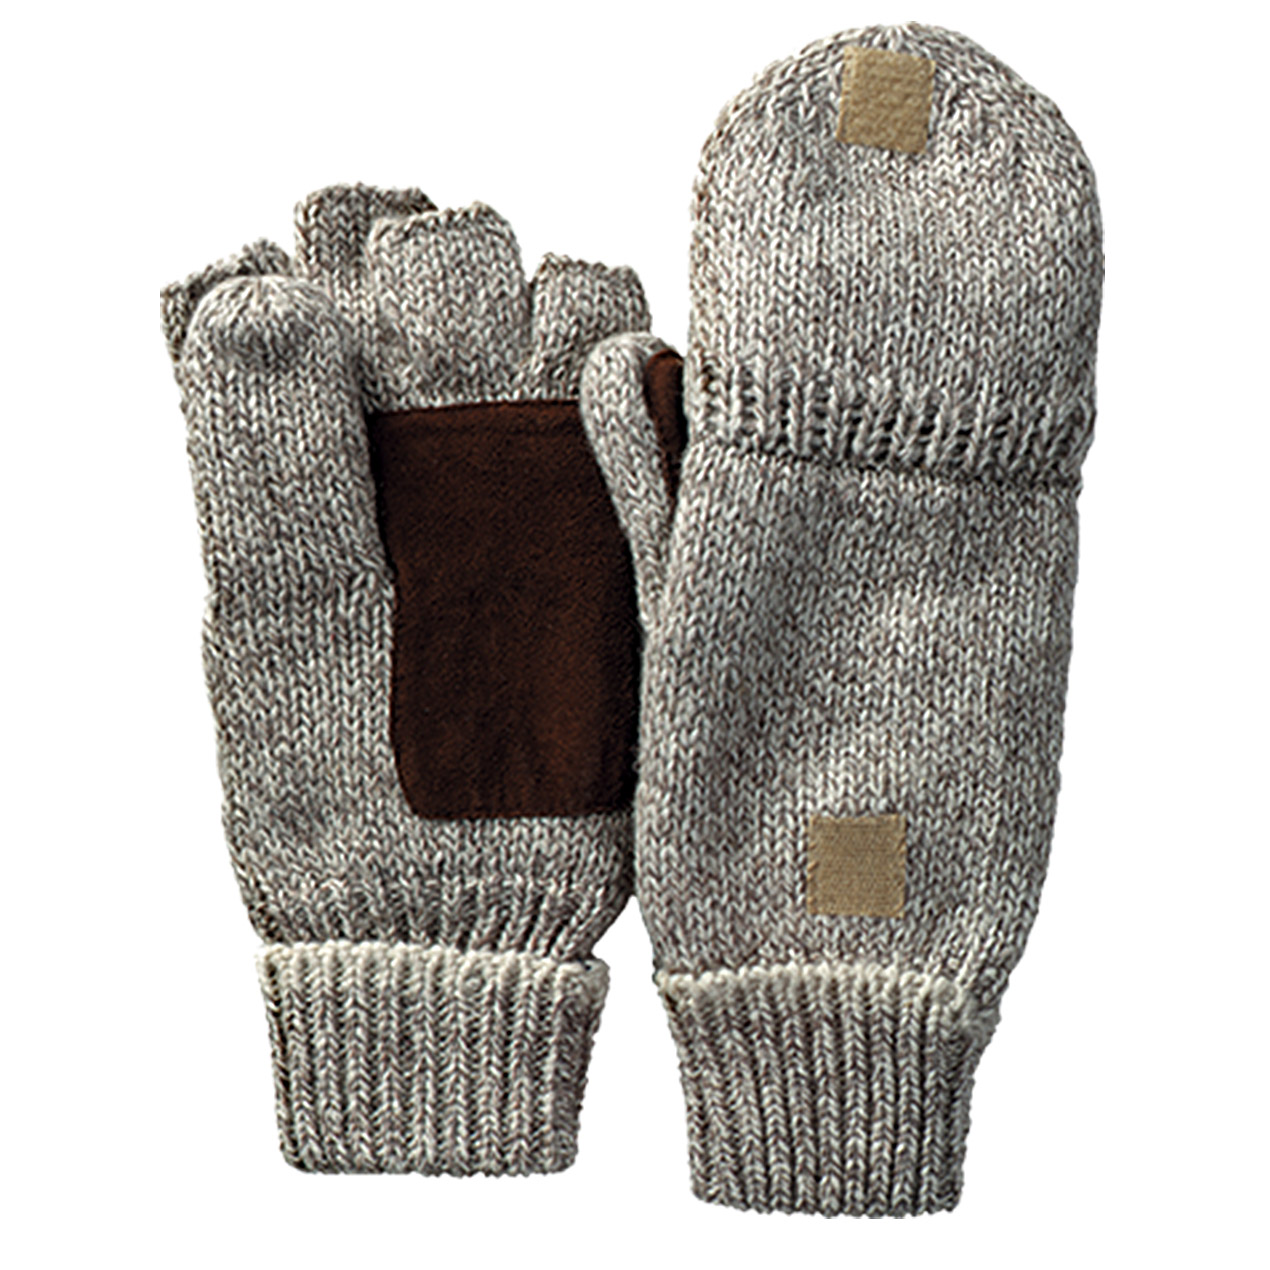 http://www.freezerwear.com/Shared/Images/Product/511-513-Fingerless-Gloves-With-Hood-Pair/Samco_gloves_511-513.jpg